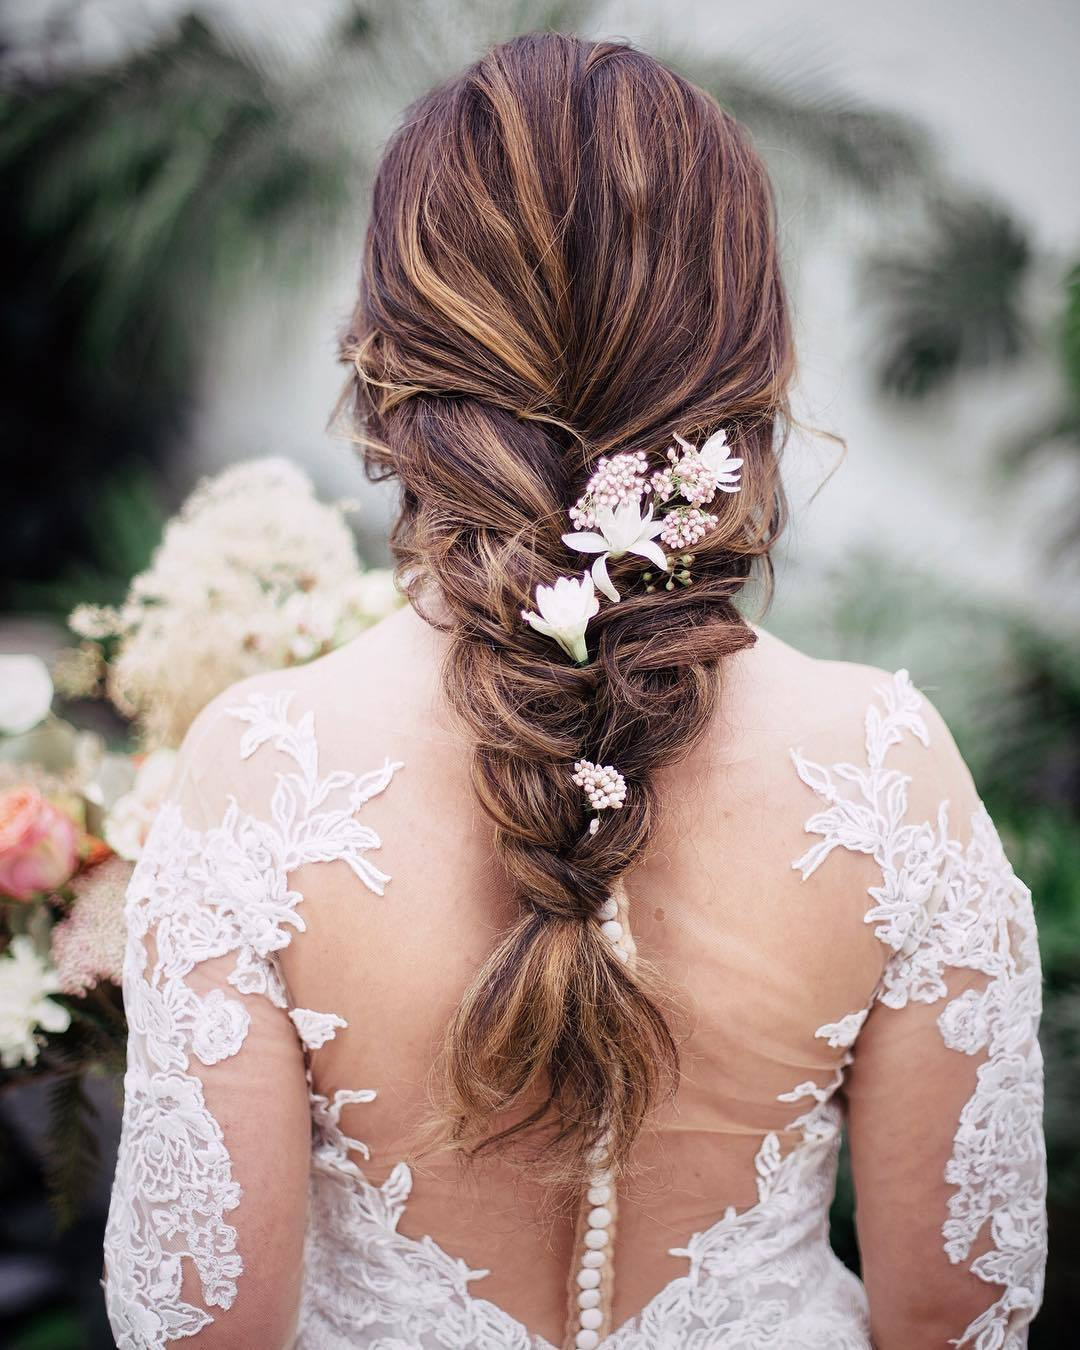 Wedding Hairstyle With Braid
 47 Stunning Wedding Hairstyles All Brides Will Love